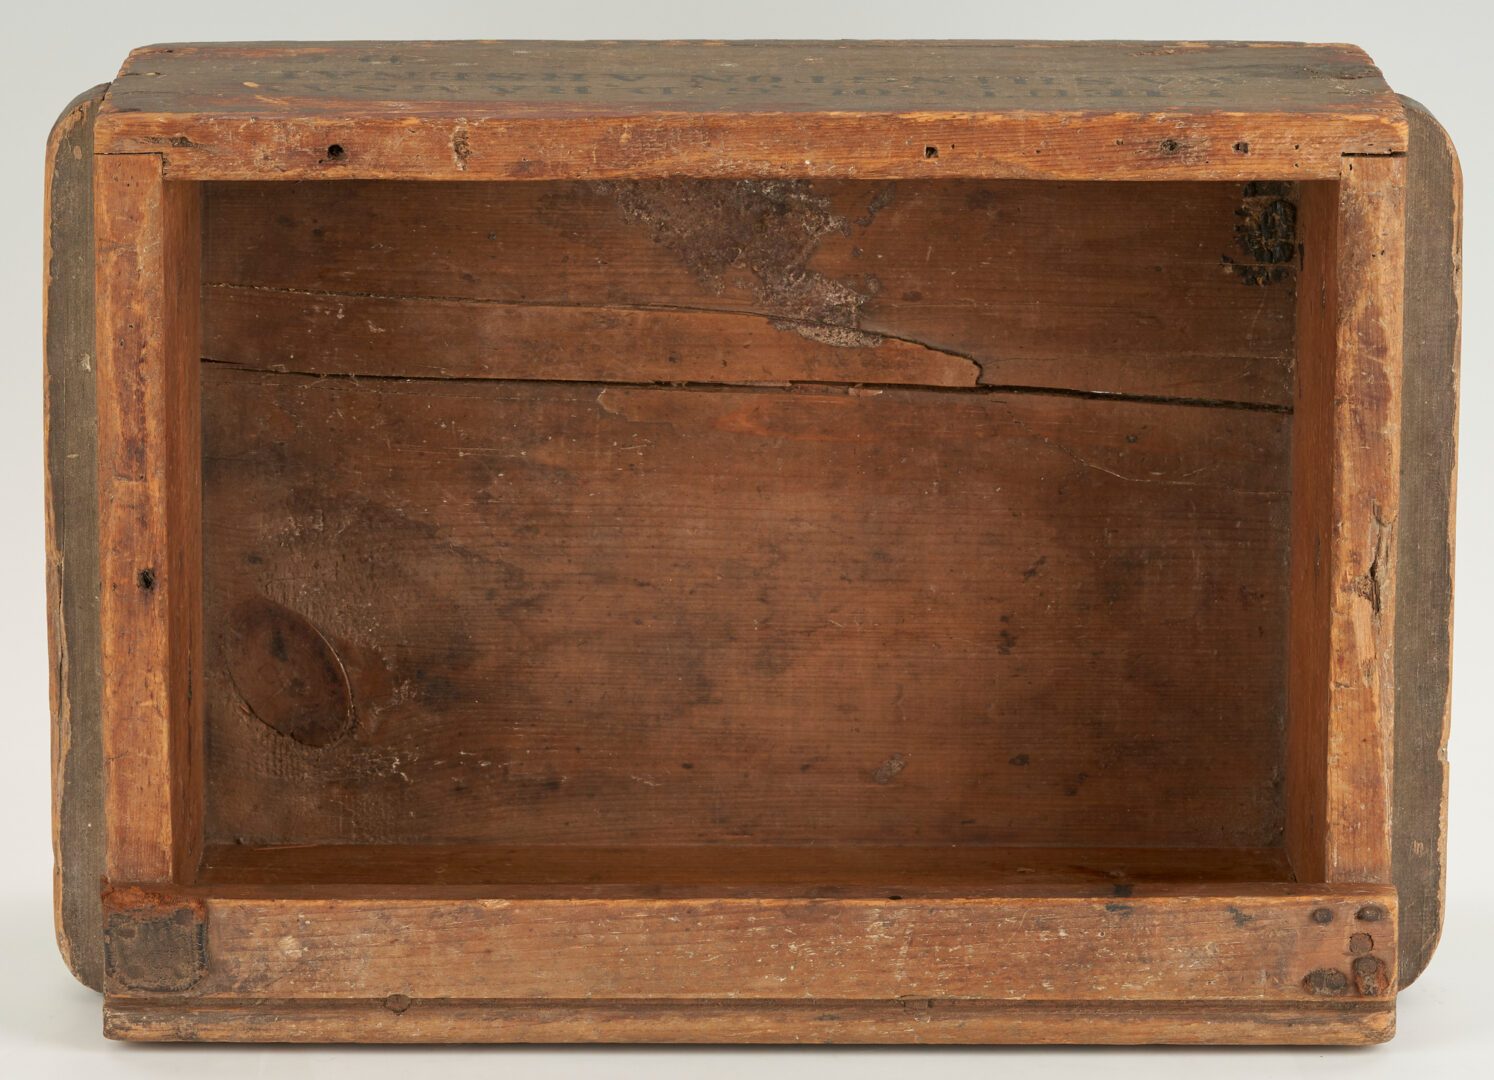 Lot 669: Civil War ID'd Officer Field Desk made from Watervliet Cartridge Box, Washington Arsenal